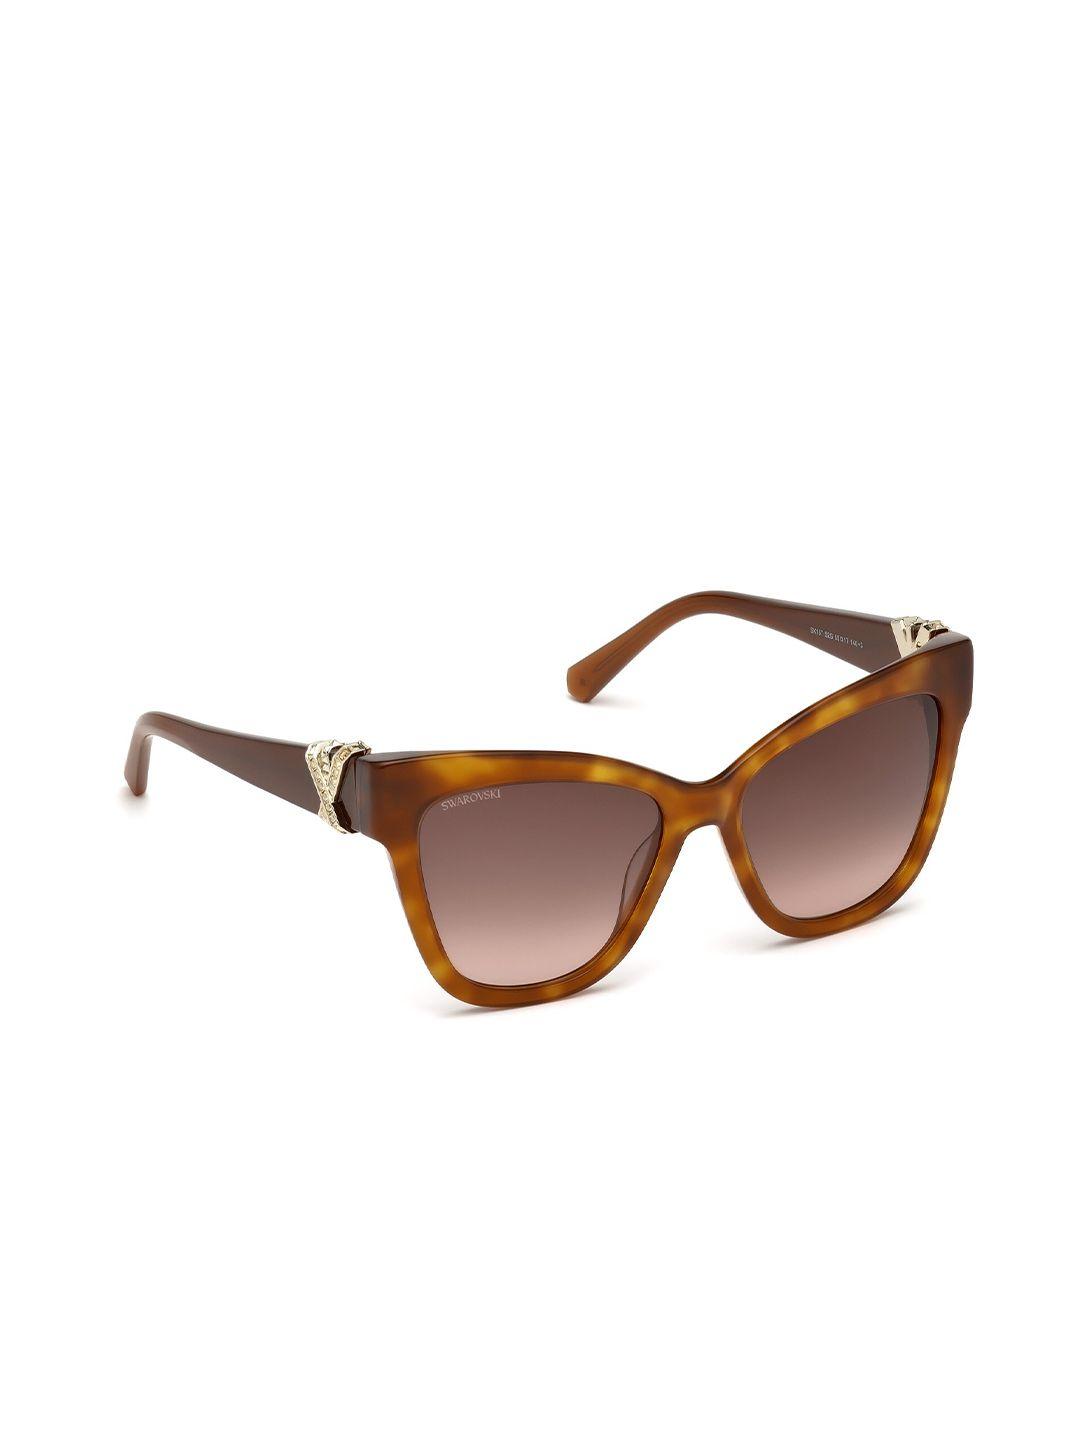 swarovski women brown sunglasses sk0157 55 52g-brown